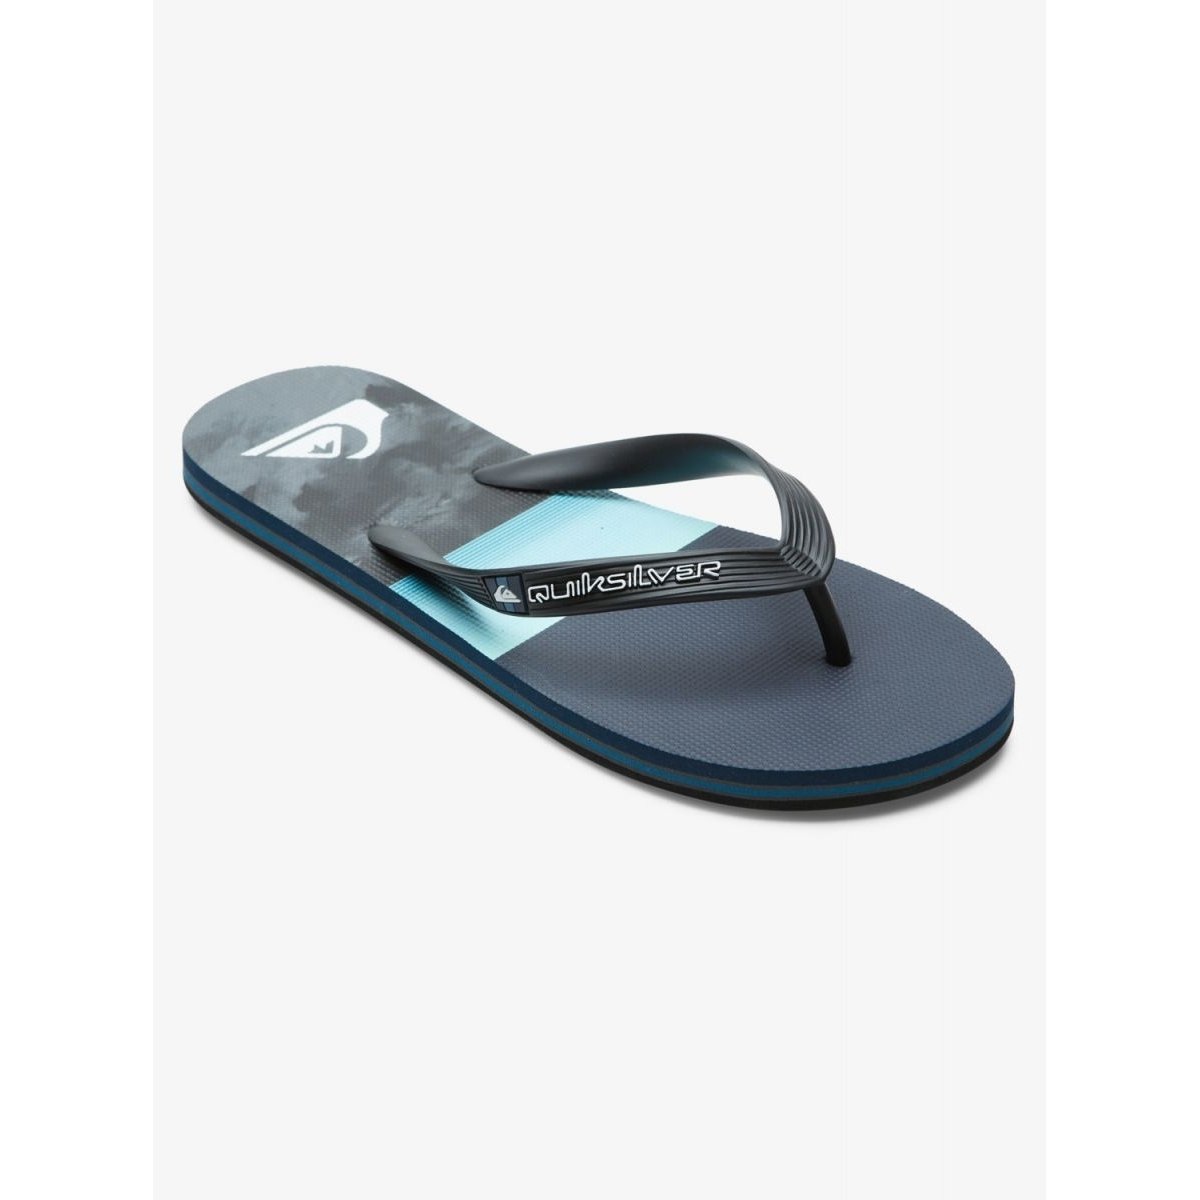 Quiksilver Men's Molokai Panel Flip Flop Sandals - AQYL101263-XBBS BLUE/BLUE/GREY - BLUE/BLUE/GREY, 11